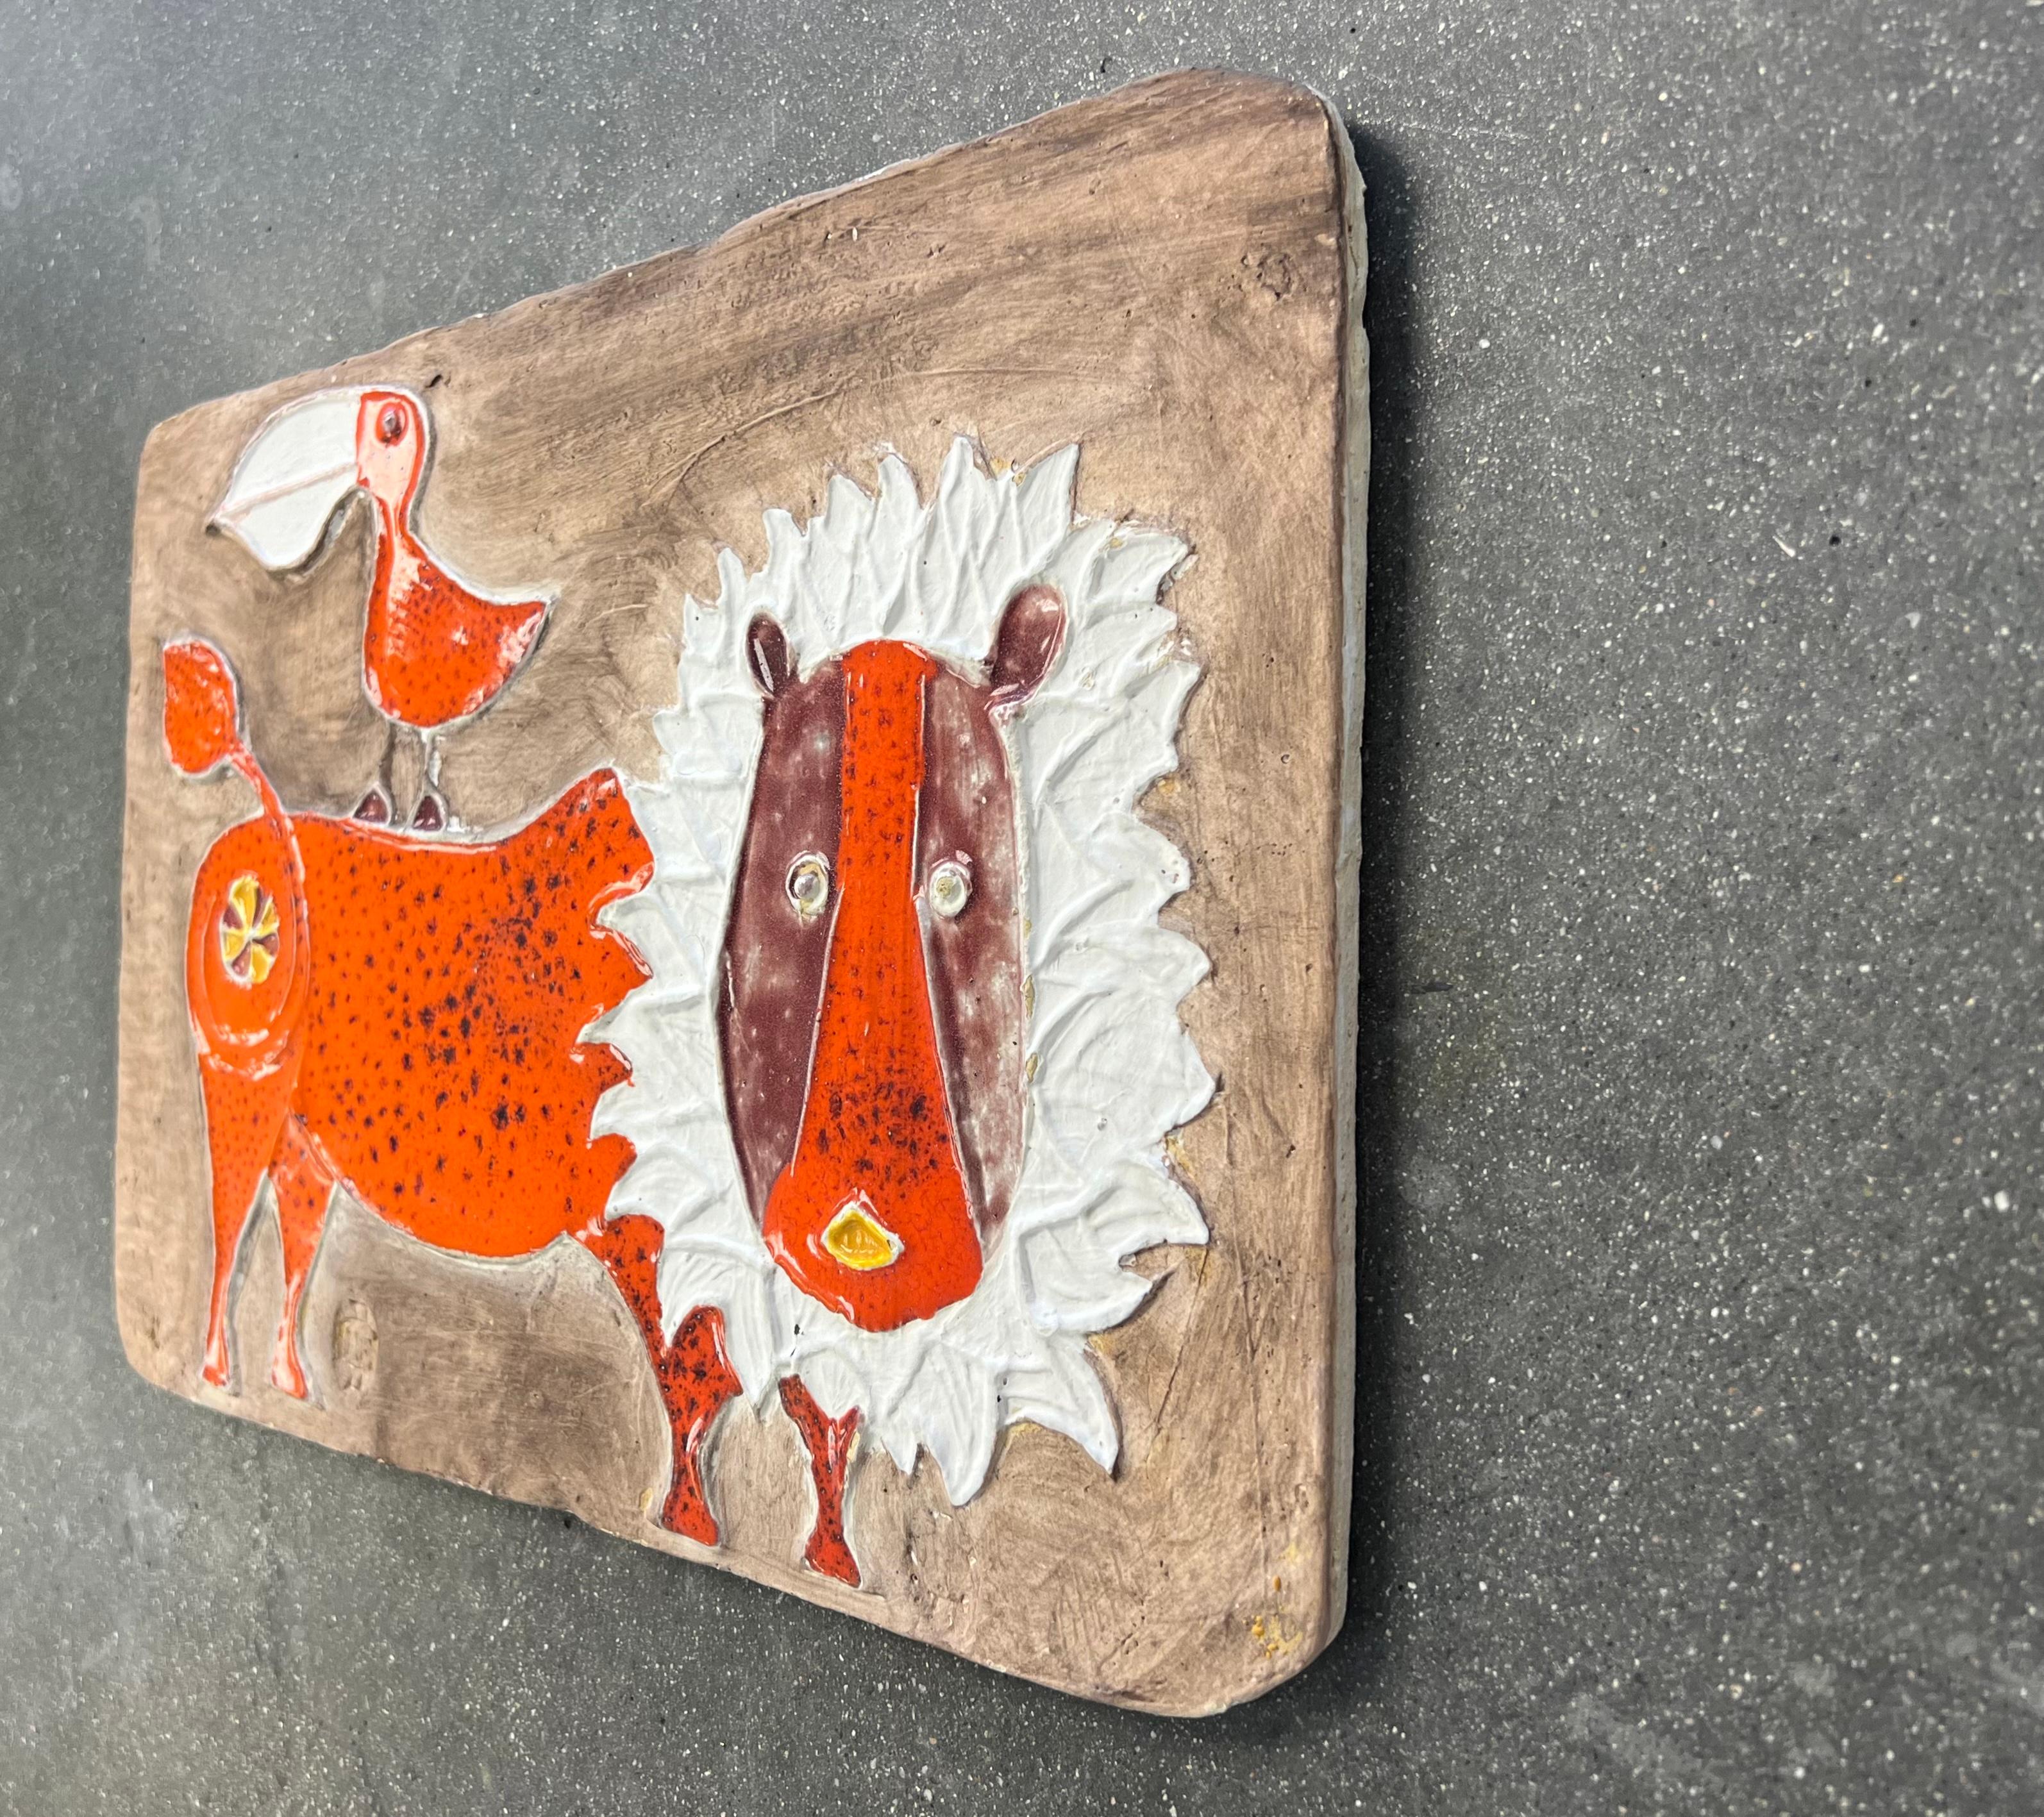 American Orange Ceramic Lion with Bird Plaque Art by Bertil Vallien  For Sale